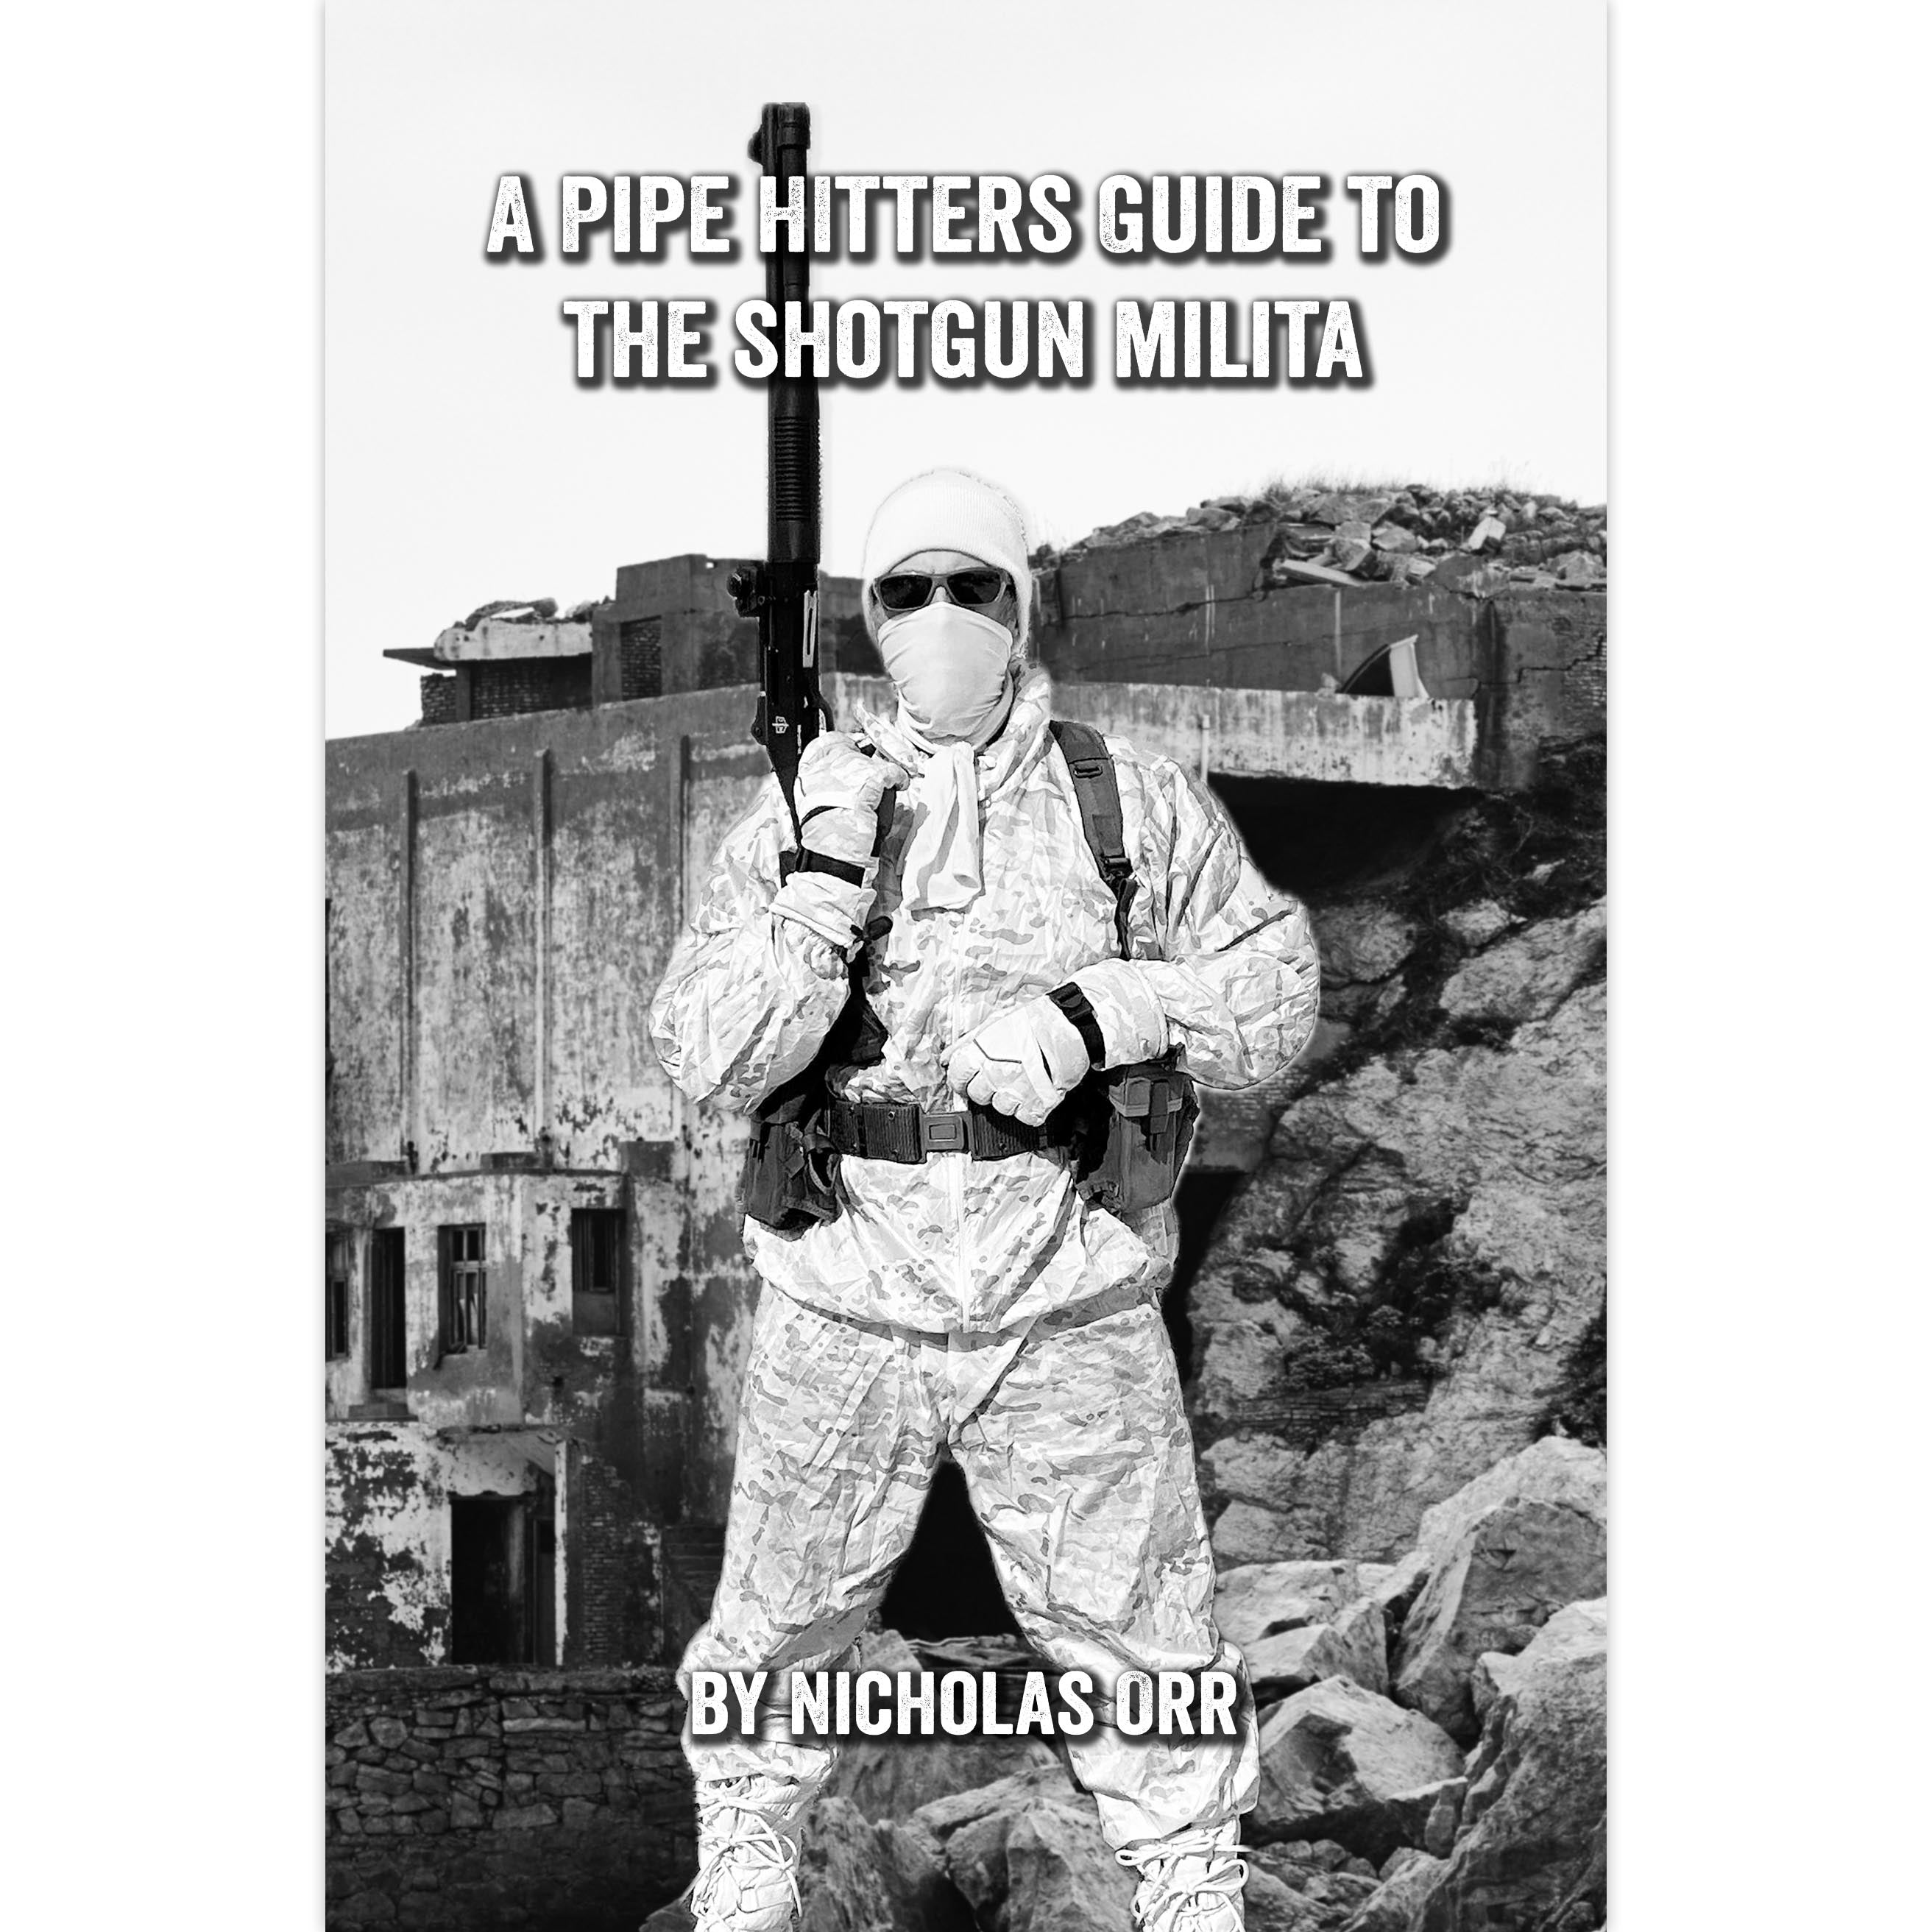 Pipe Hitters Guide to the Shotgun Militia (PHG Book 7)